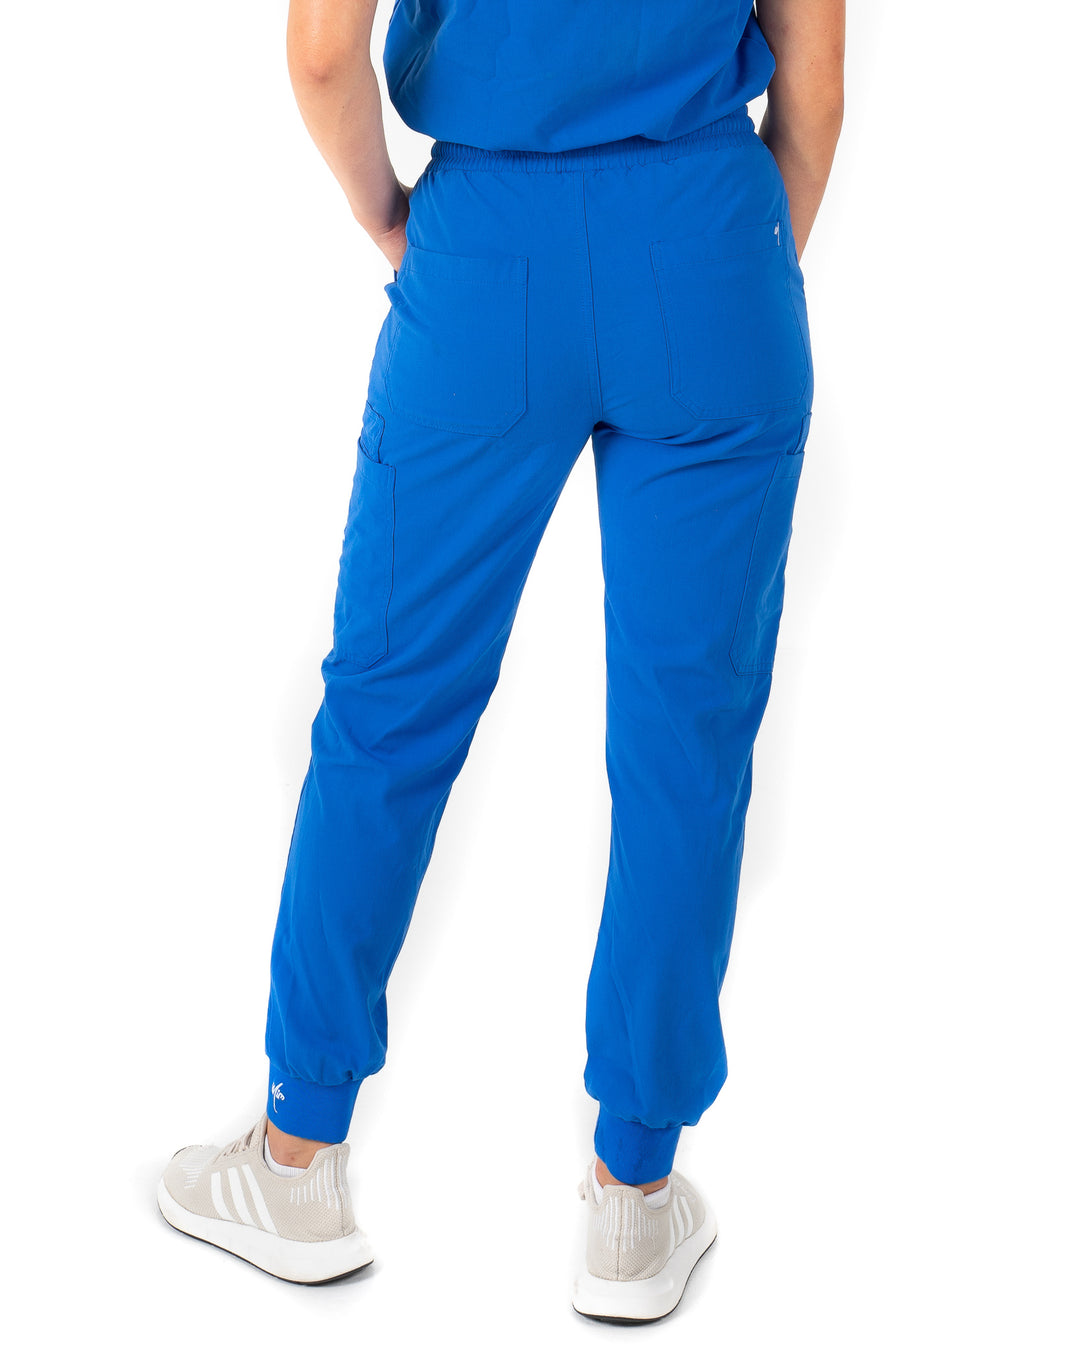 The Hatton - Royal Blue Jogger Medical Scrub Pants for Women